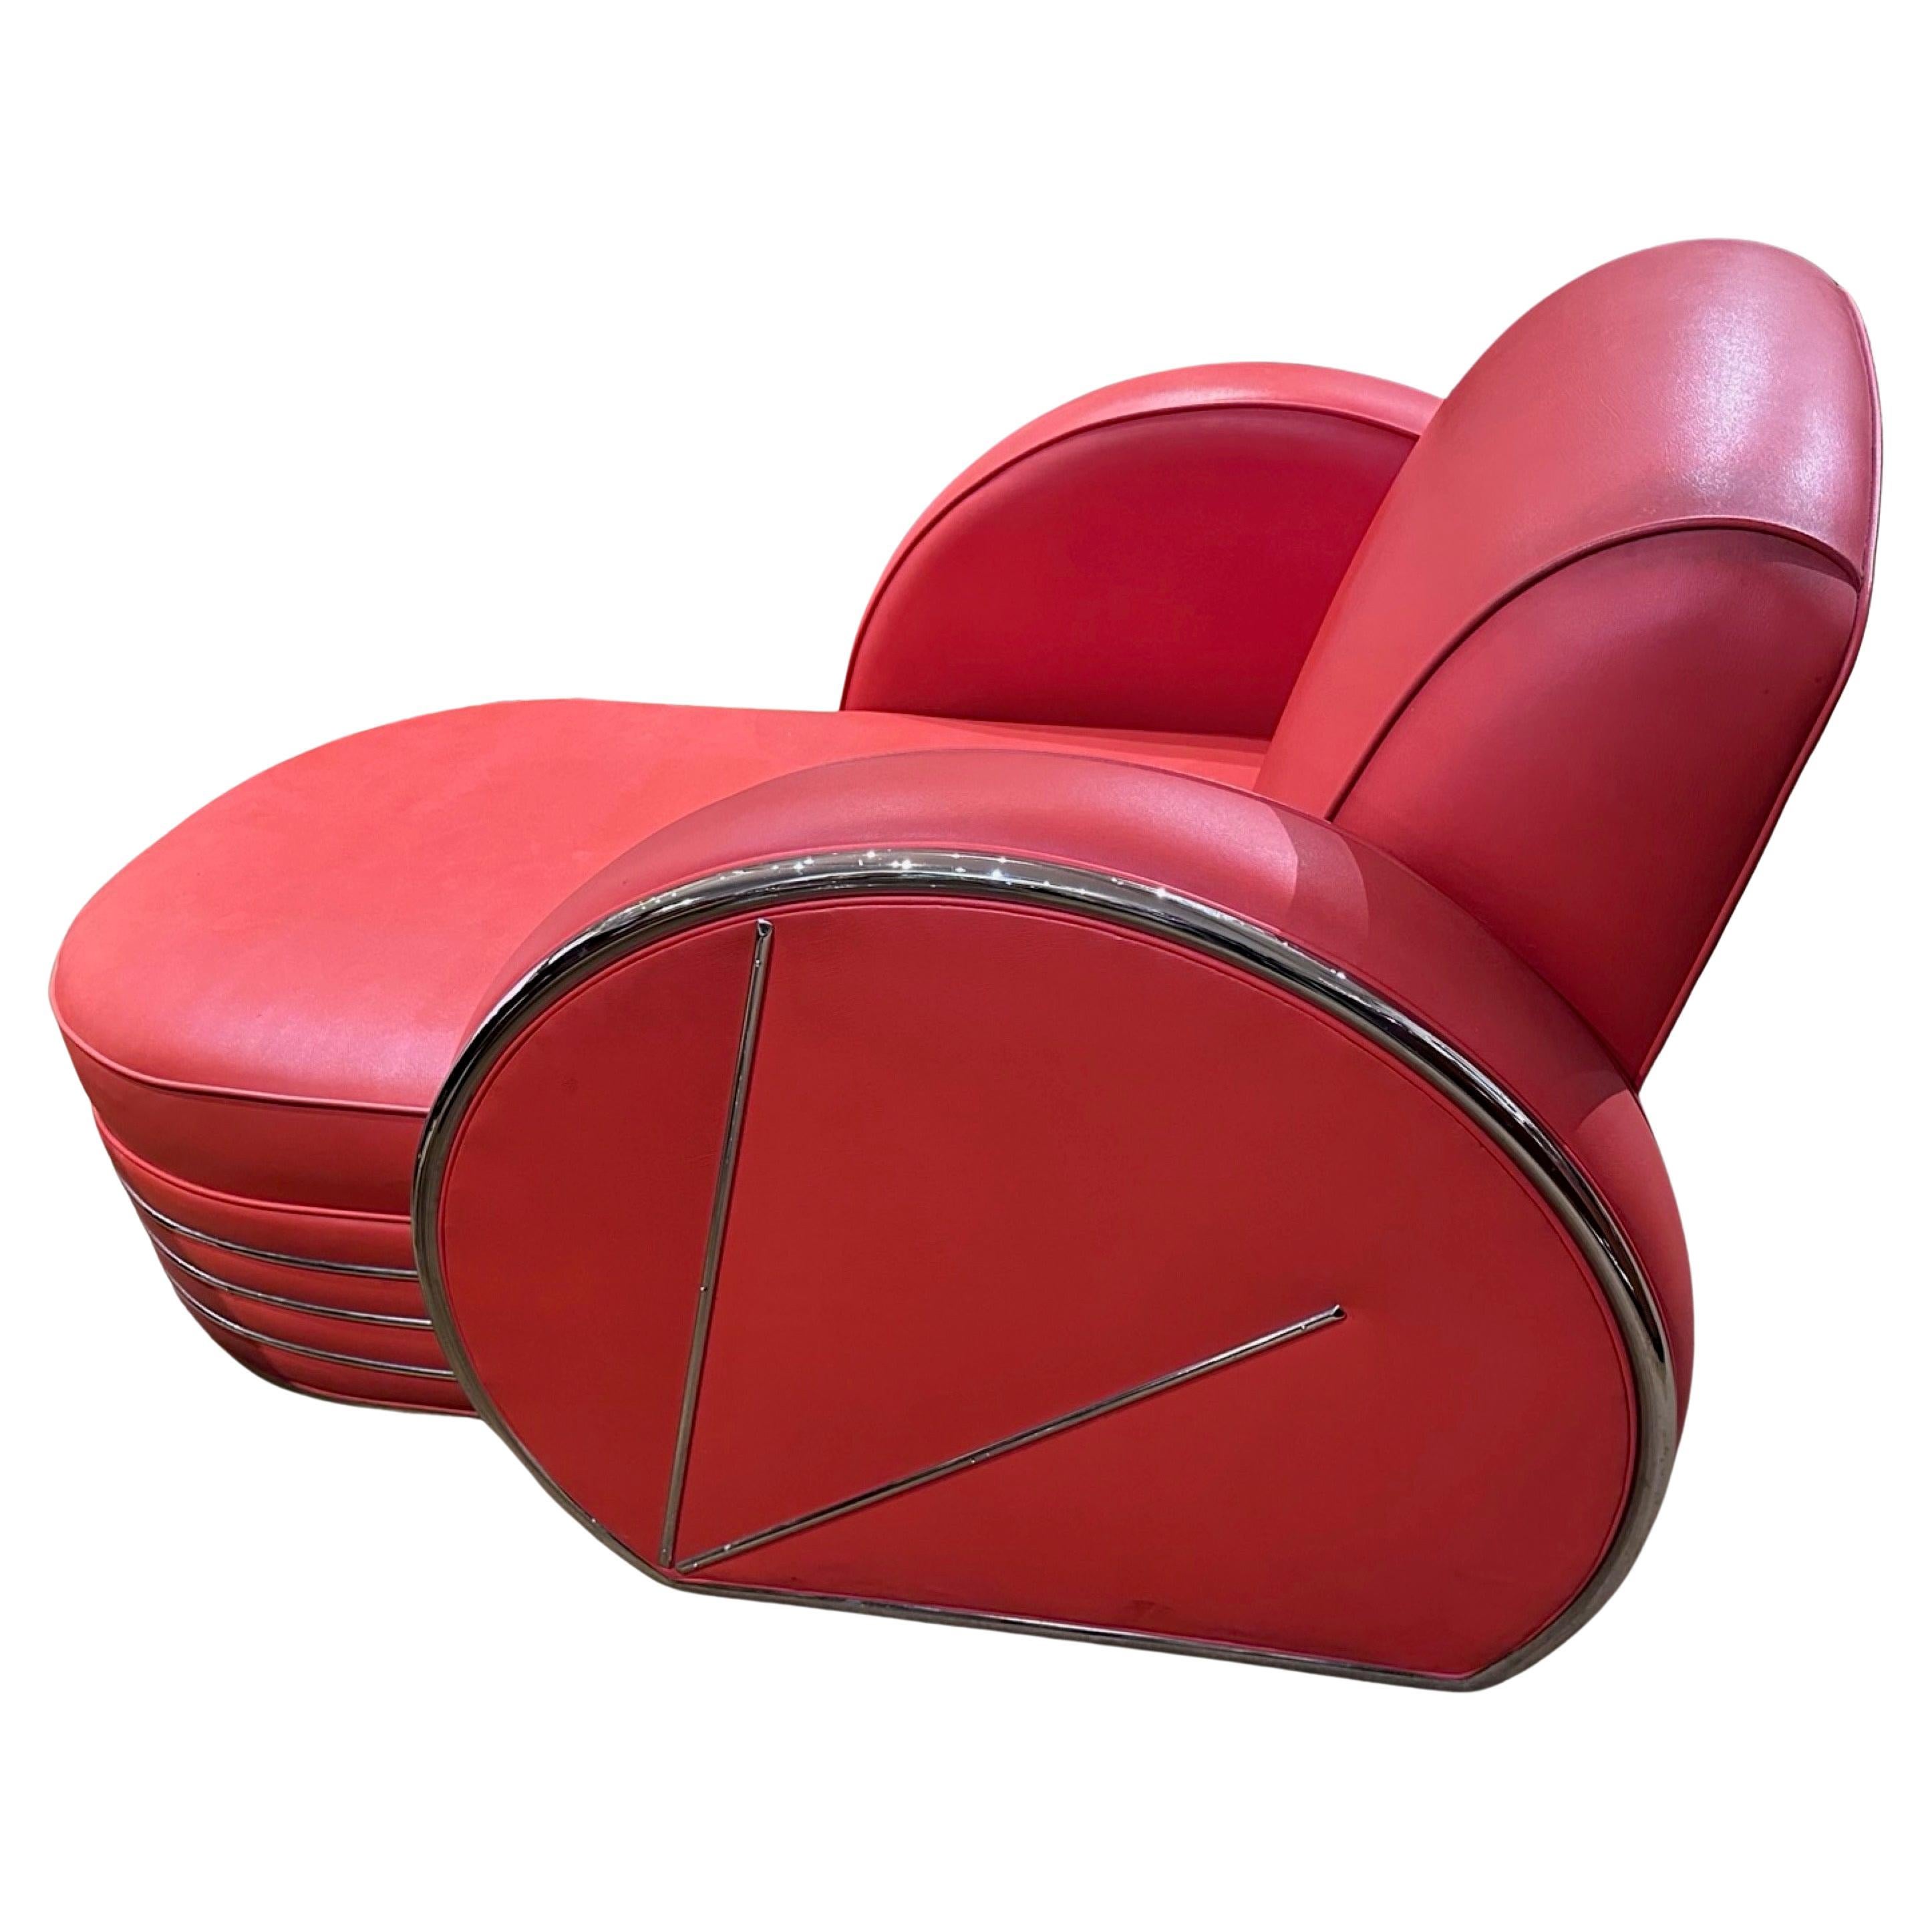 Donald Deskey Design Art Deco Sofa Chaise Lounge For Sale